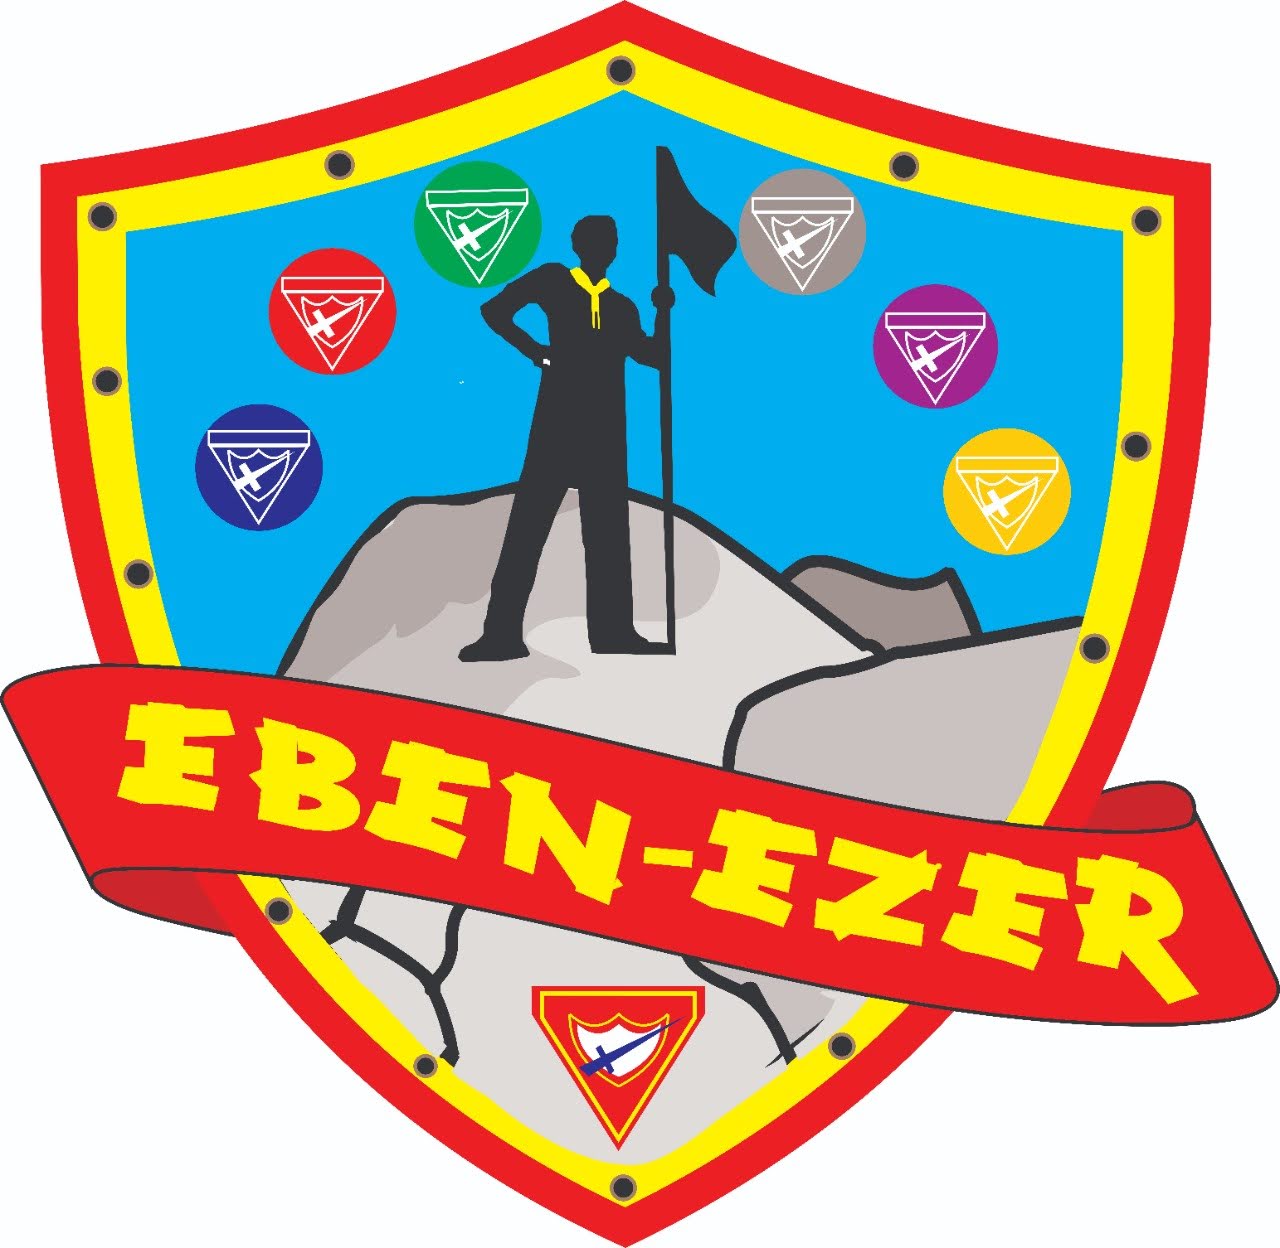 EBEN - EZER CQT